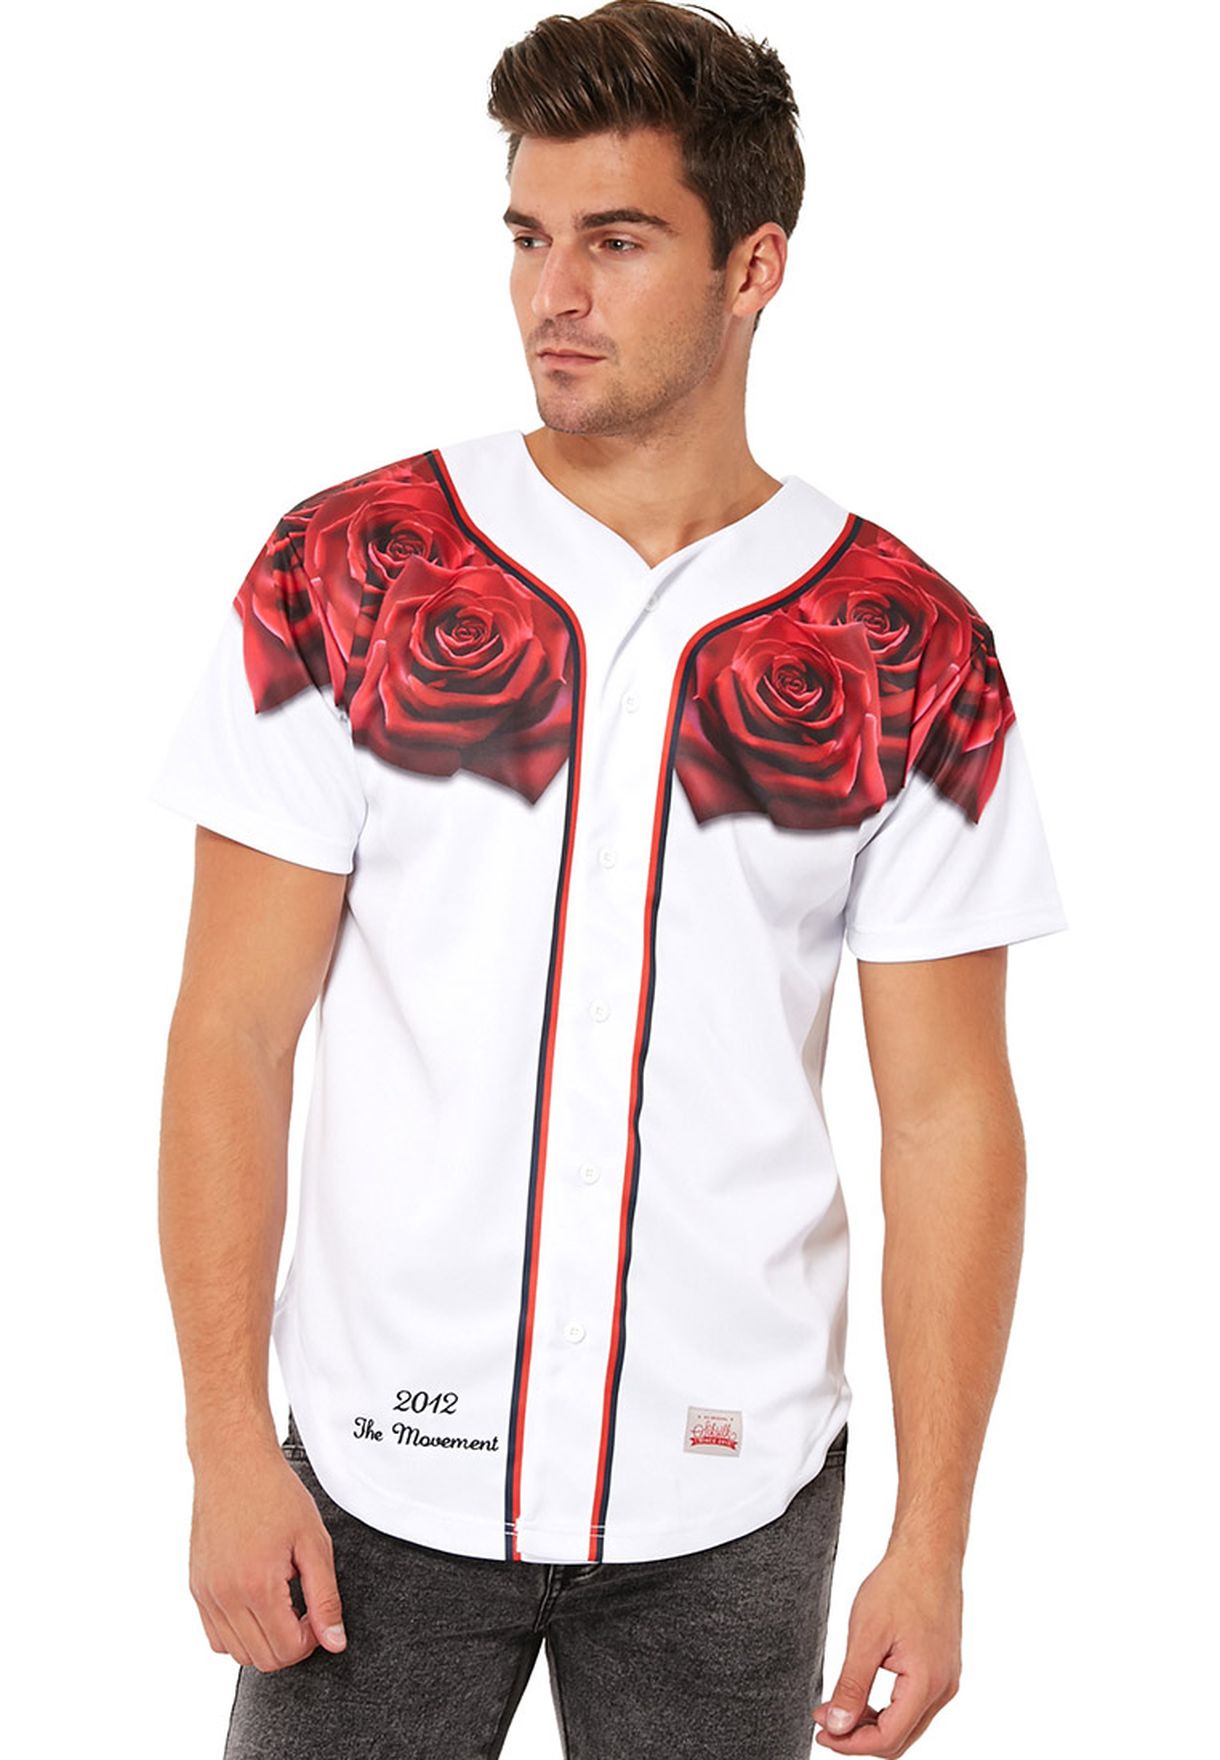 red rose baseball jersey